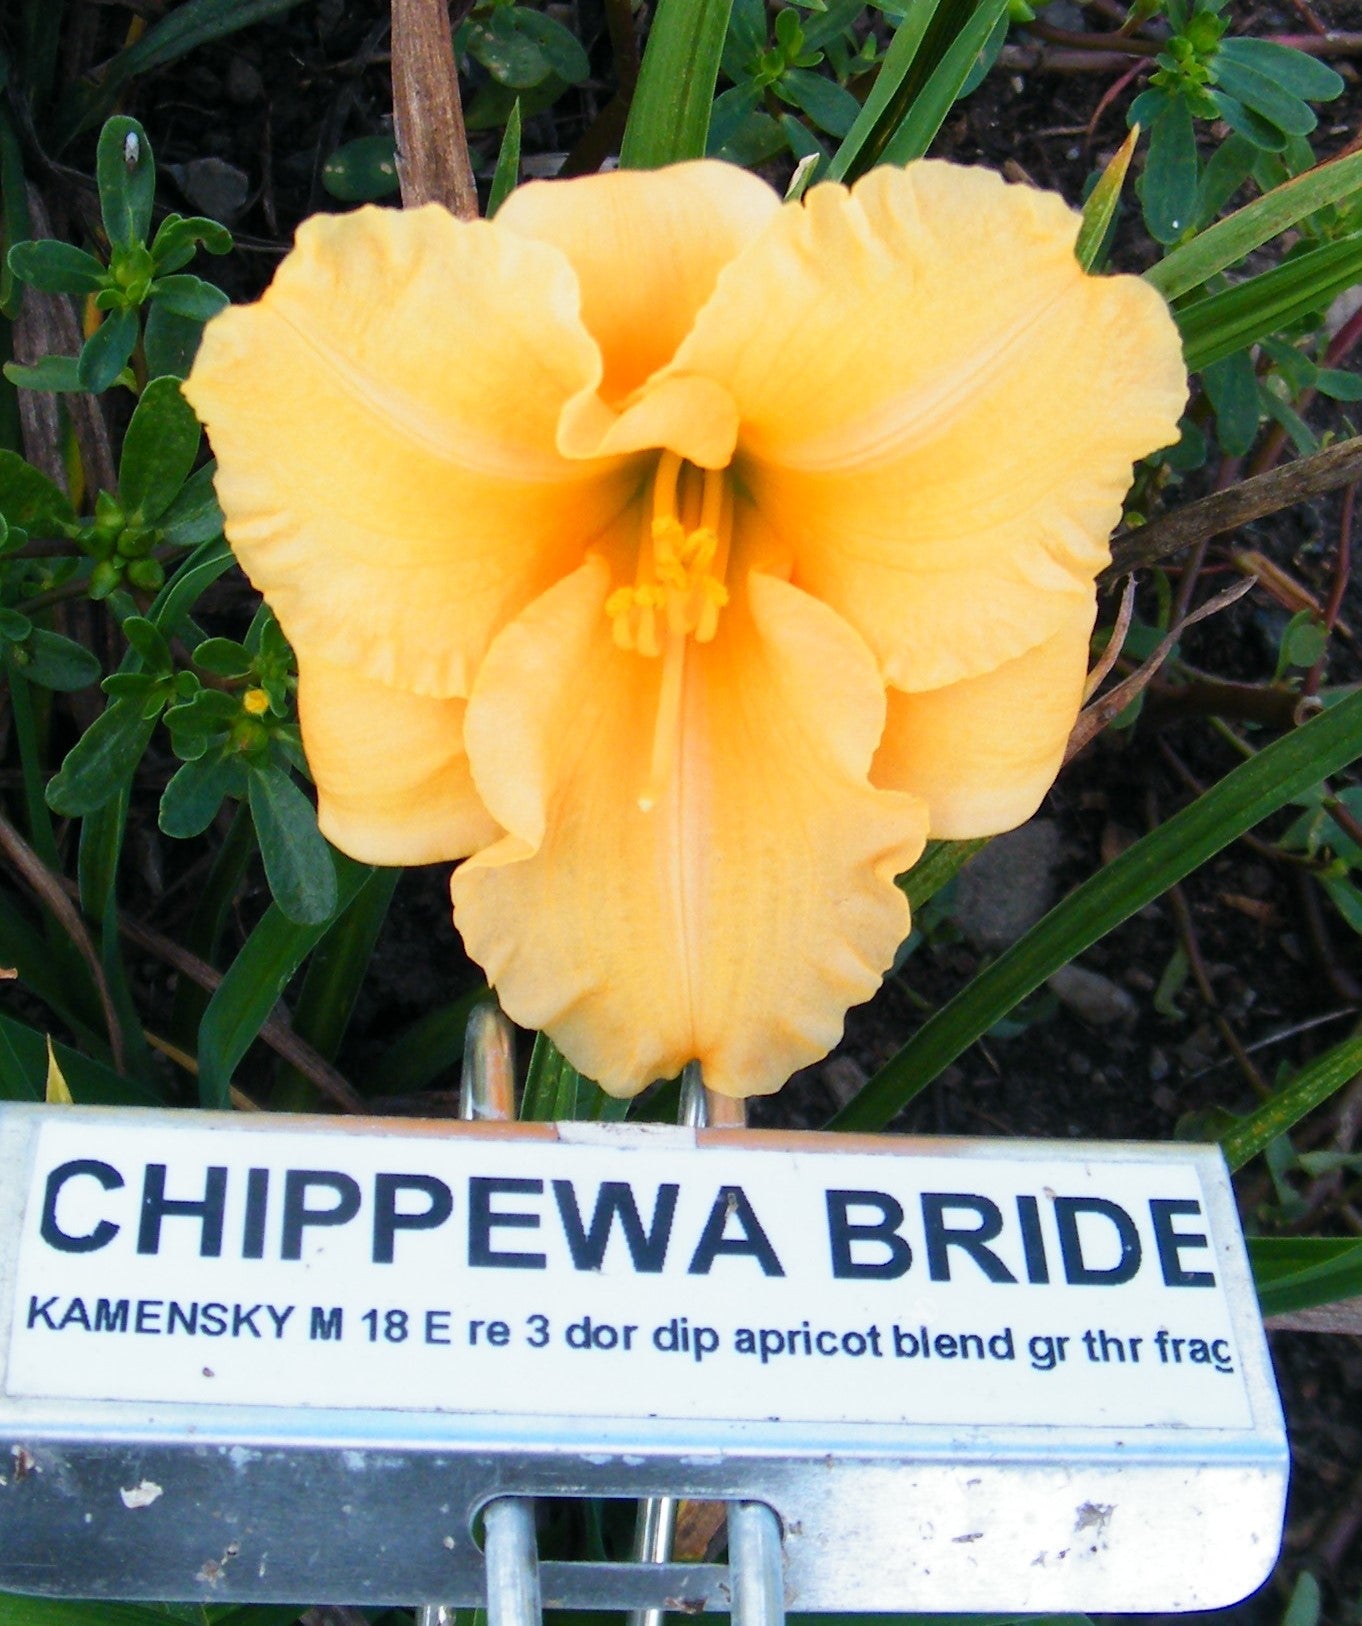 CHIPPEWA BRIDE